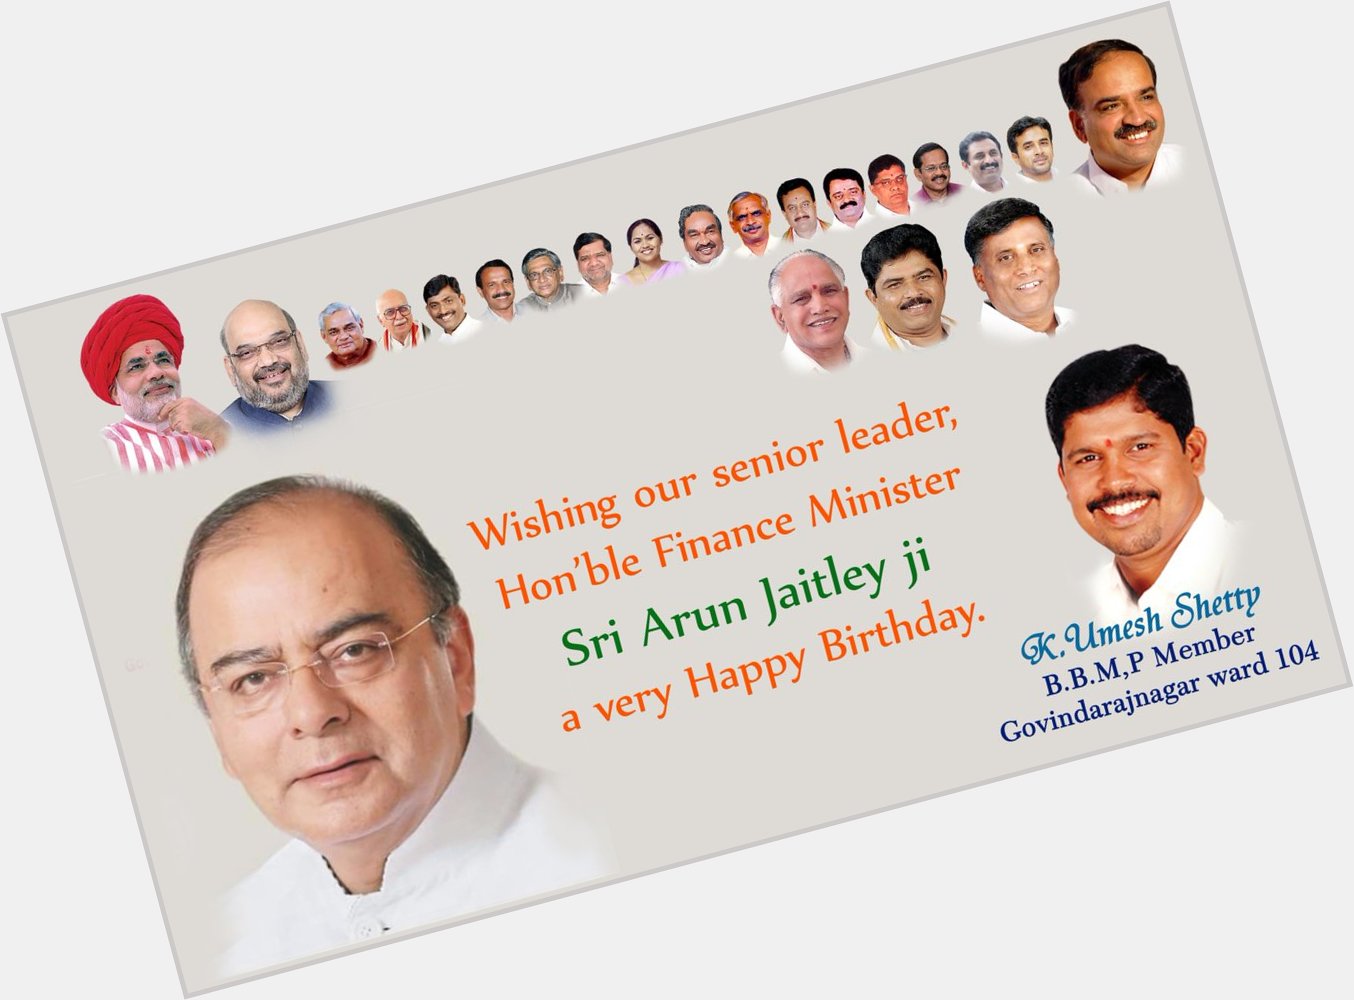 Wishing our senior leader, Hon ble Finance Minister Sri Arun Jaitley ji a very Happy Birthday. 